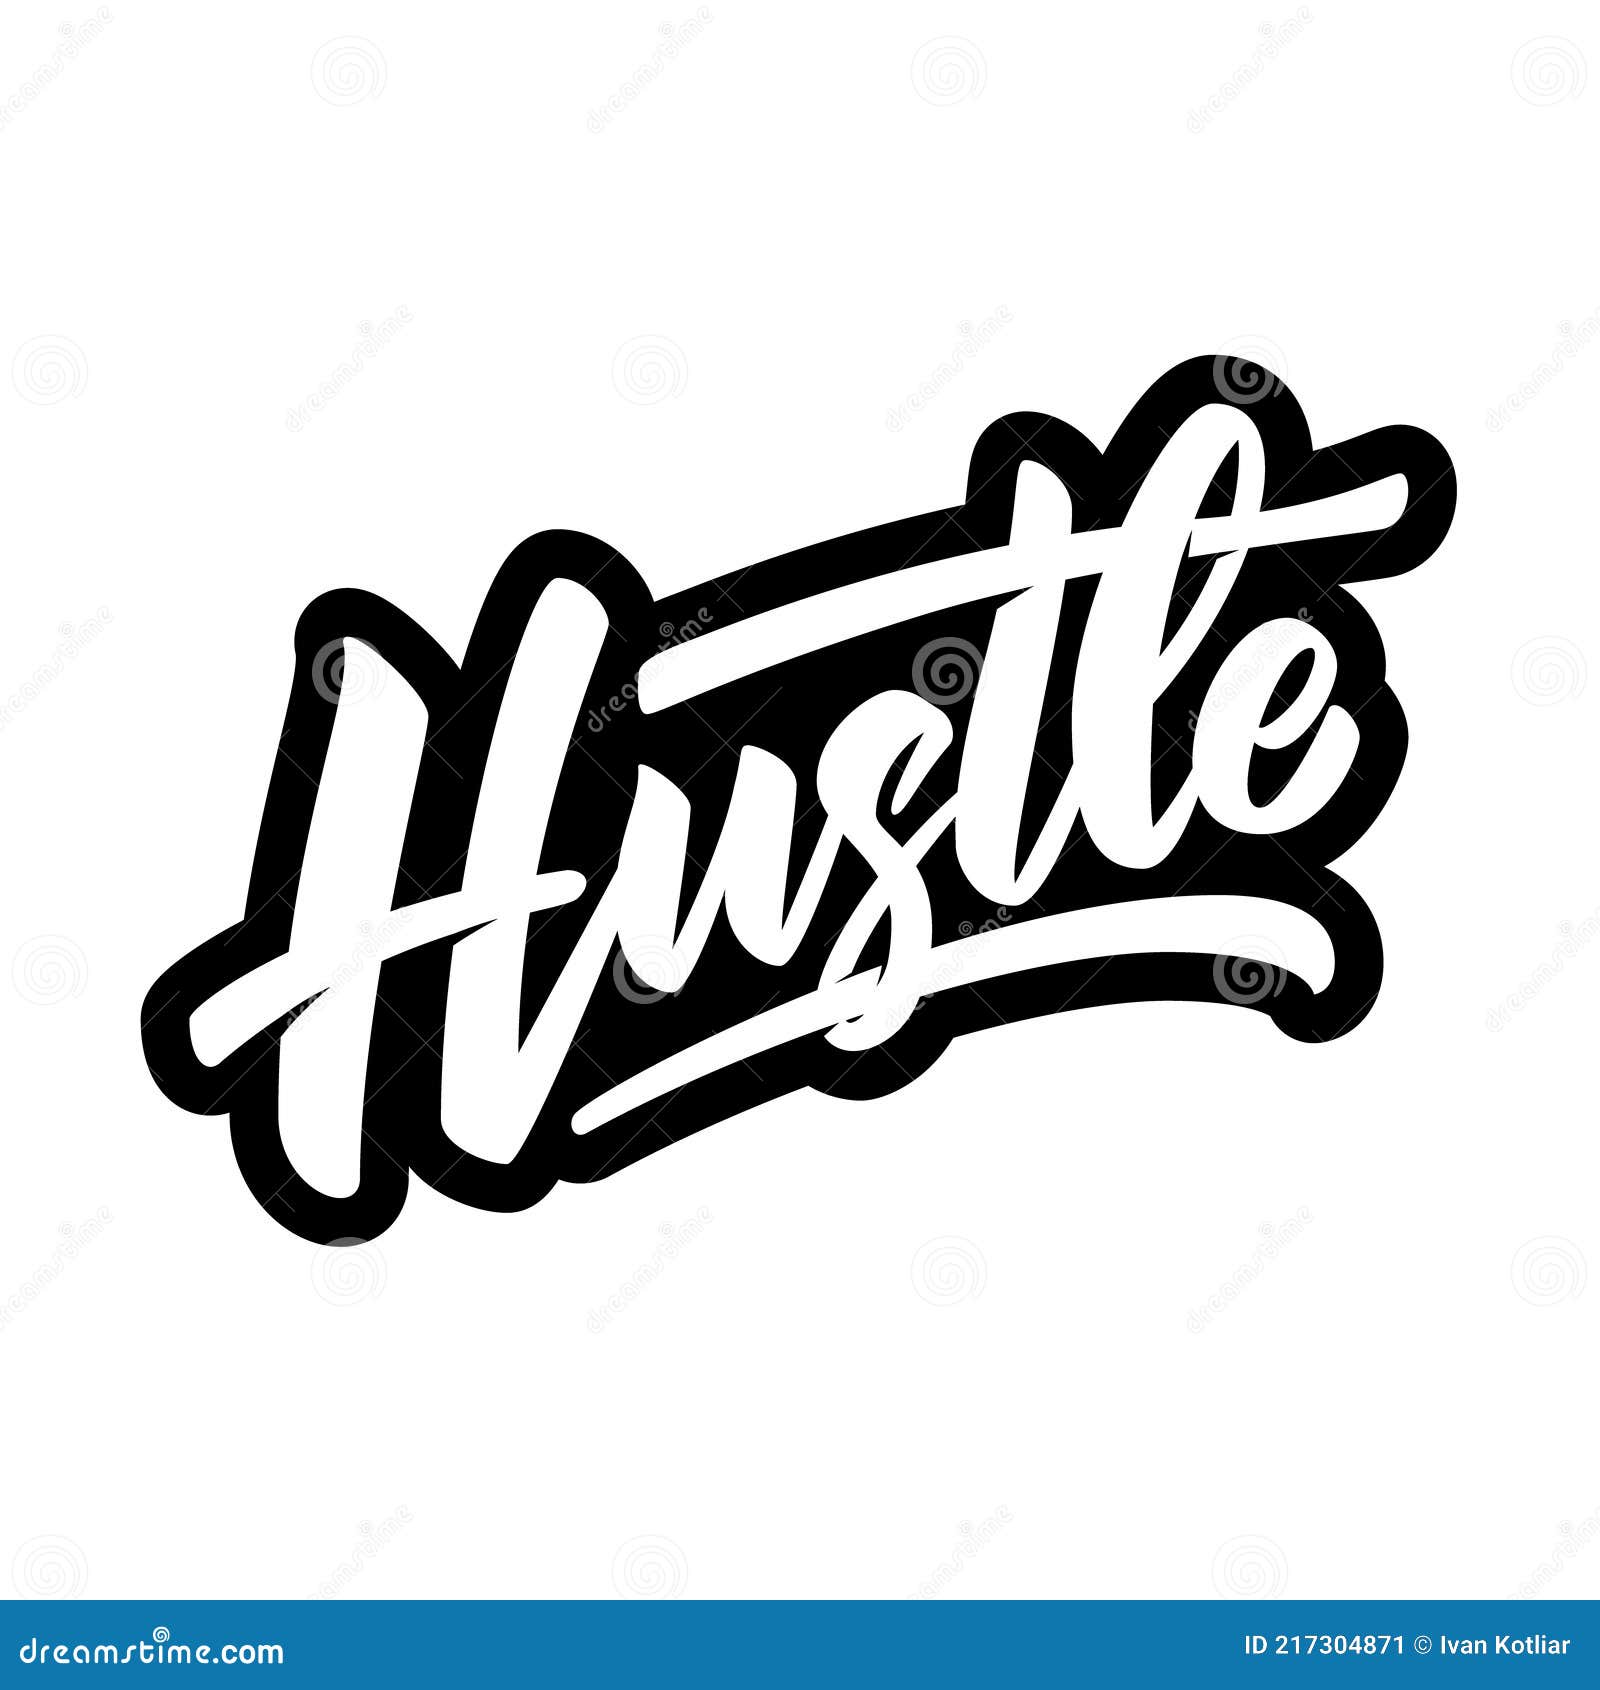 Hustle - David Tomas Martinez